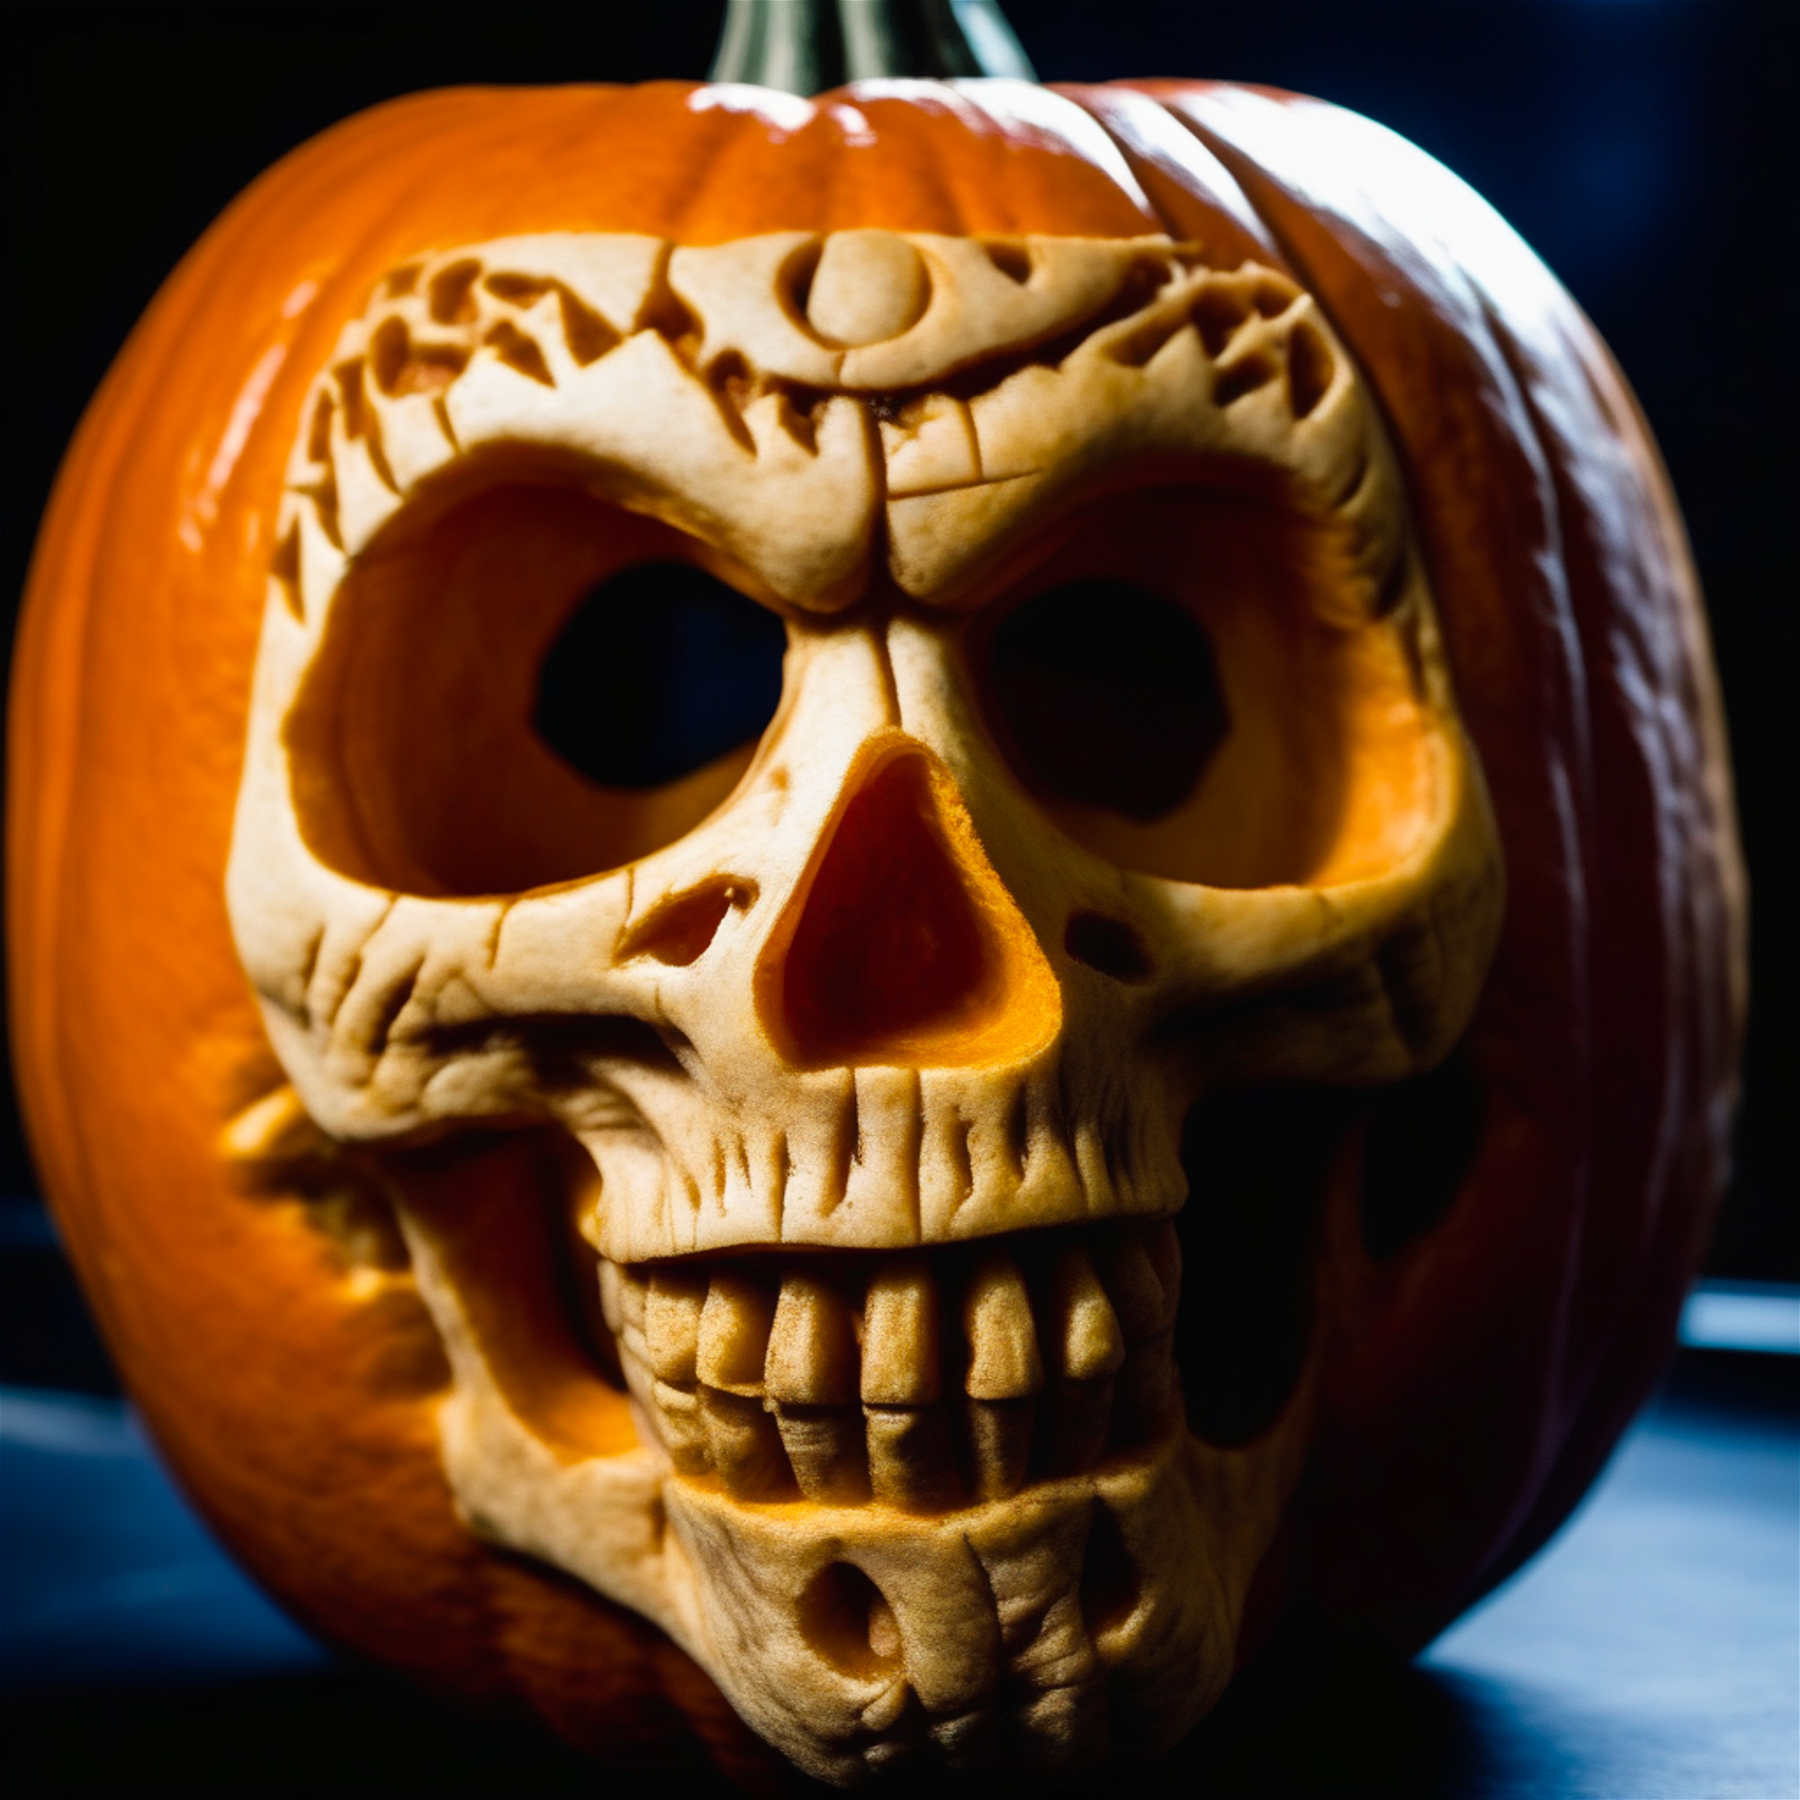 Mexican Skull Jack-o'-lantern